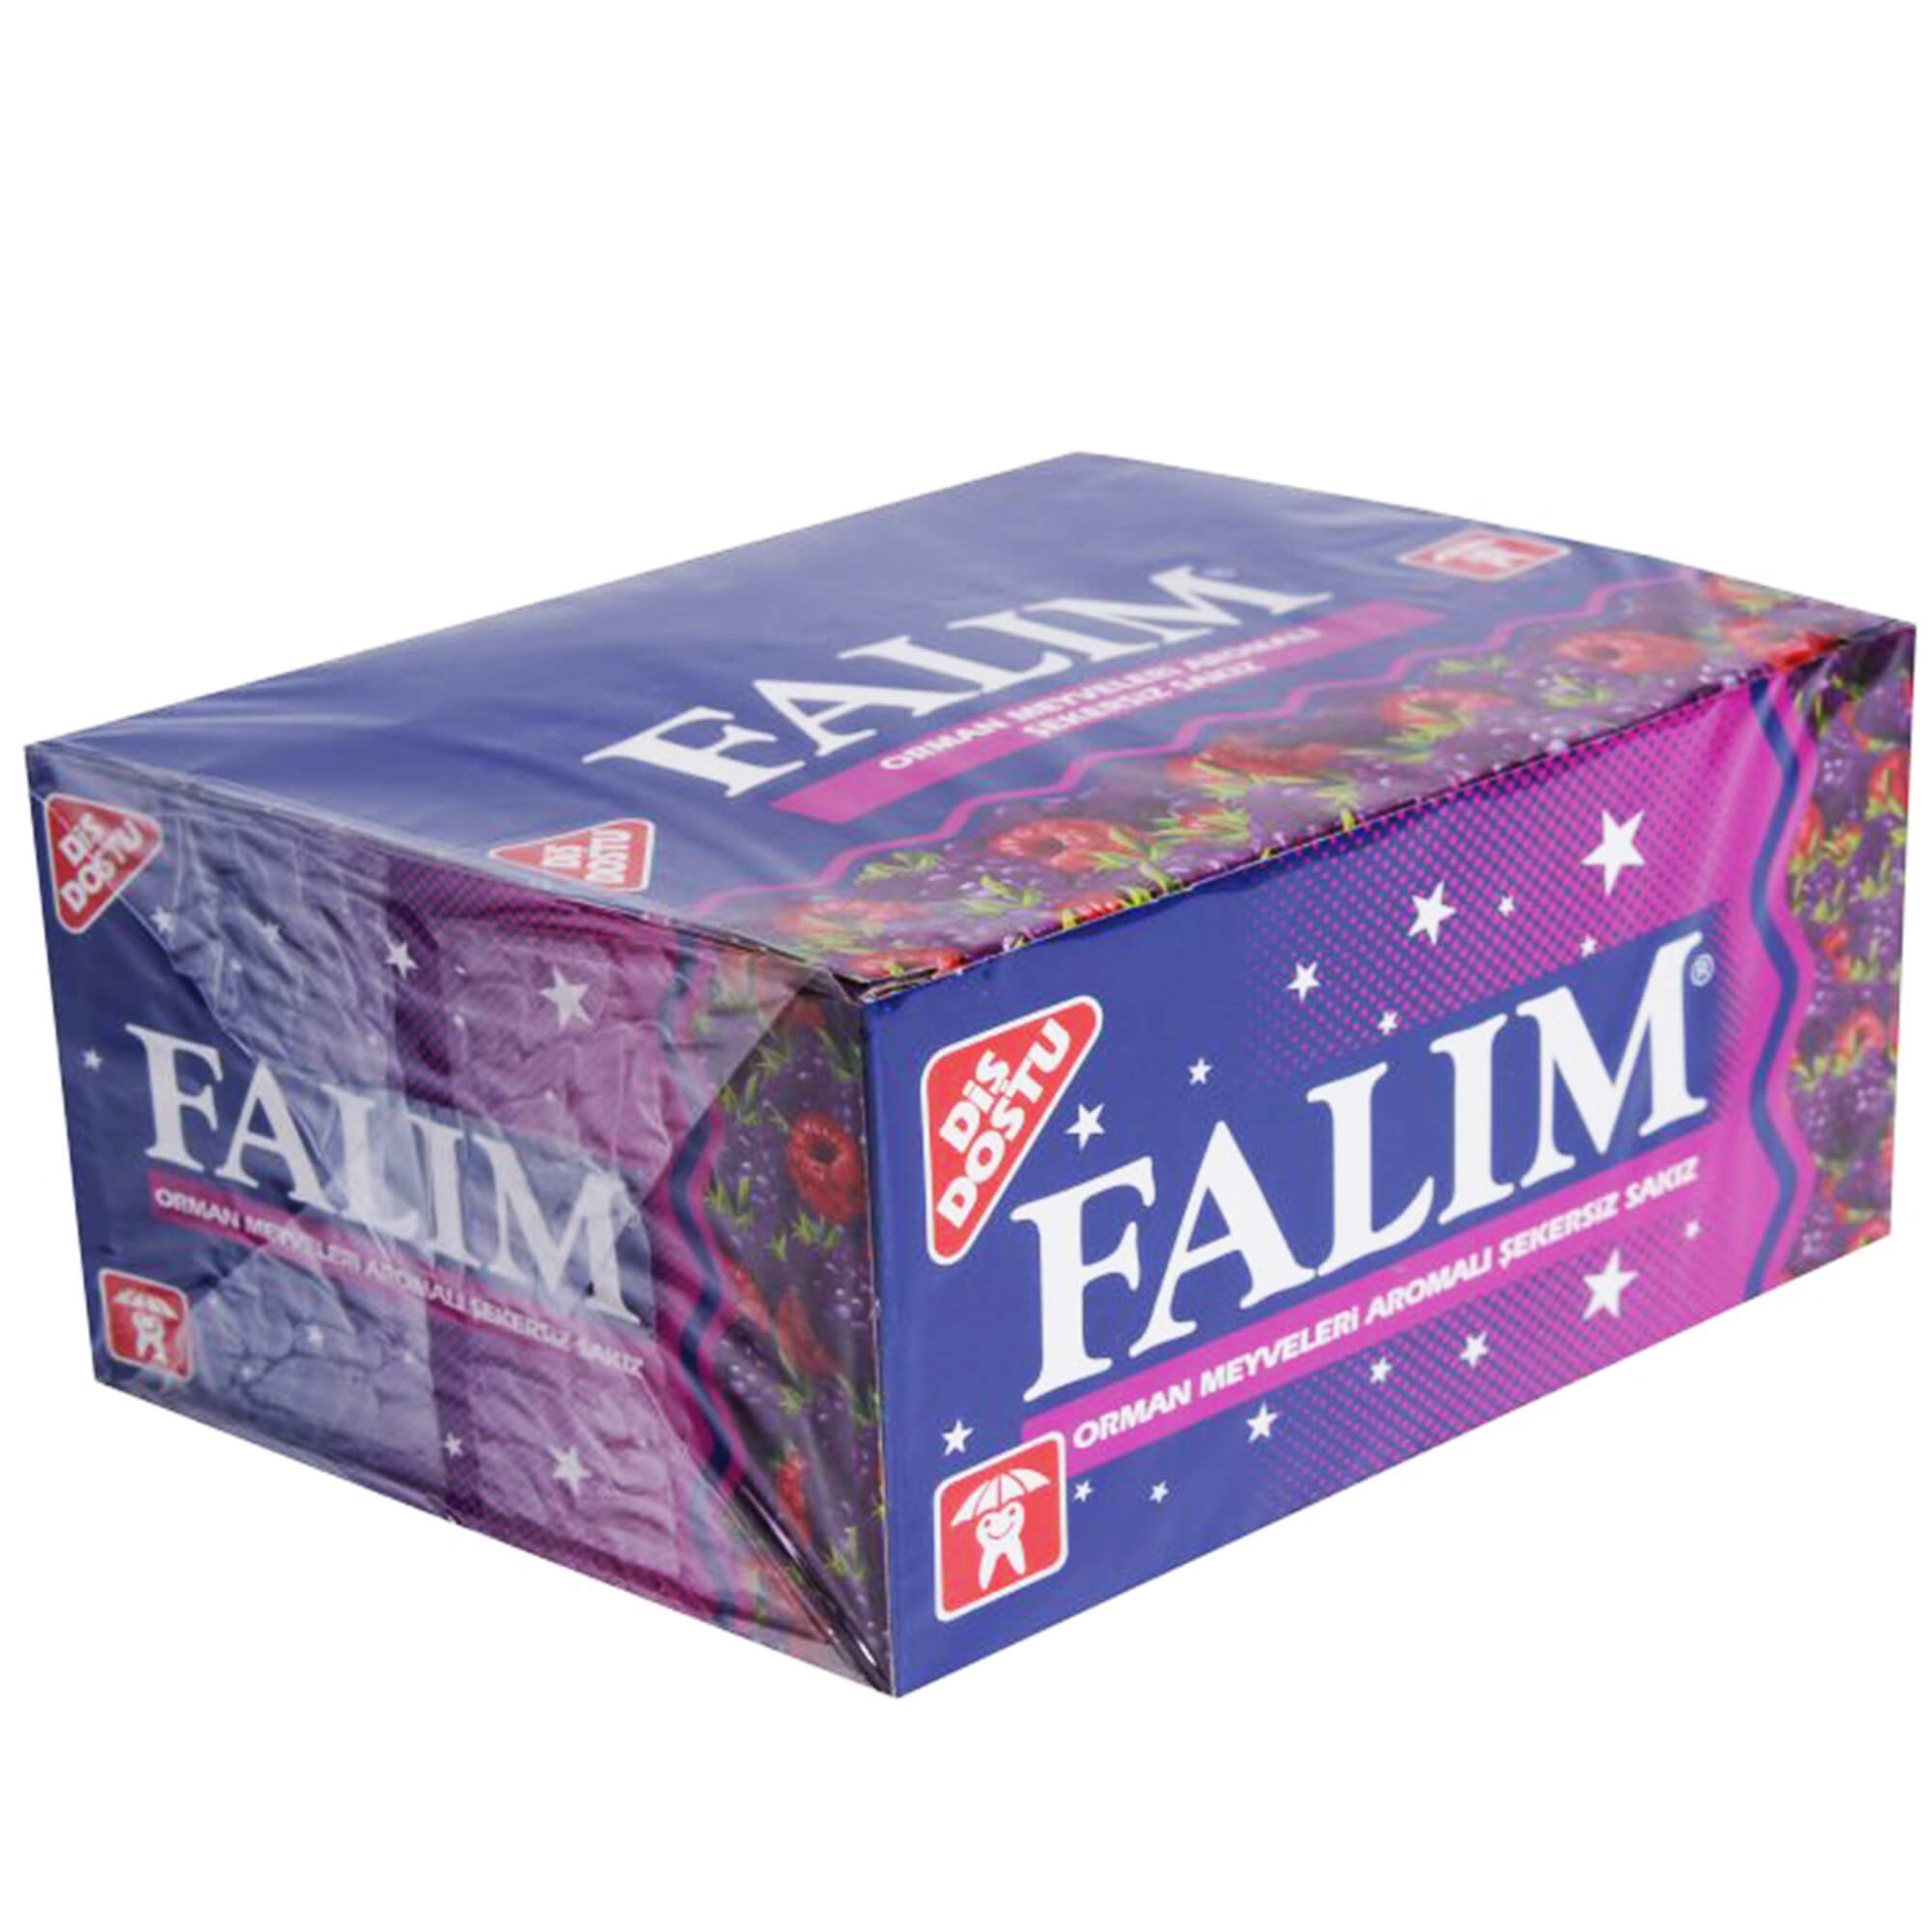 Falim sugar free chewing gum 100 pcs Forest Fruit